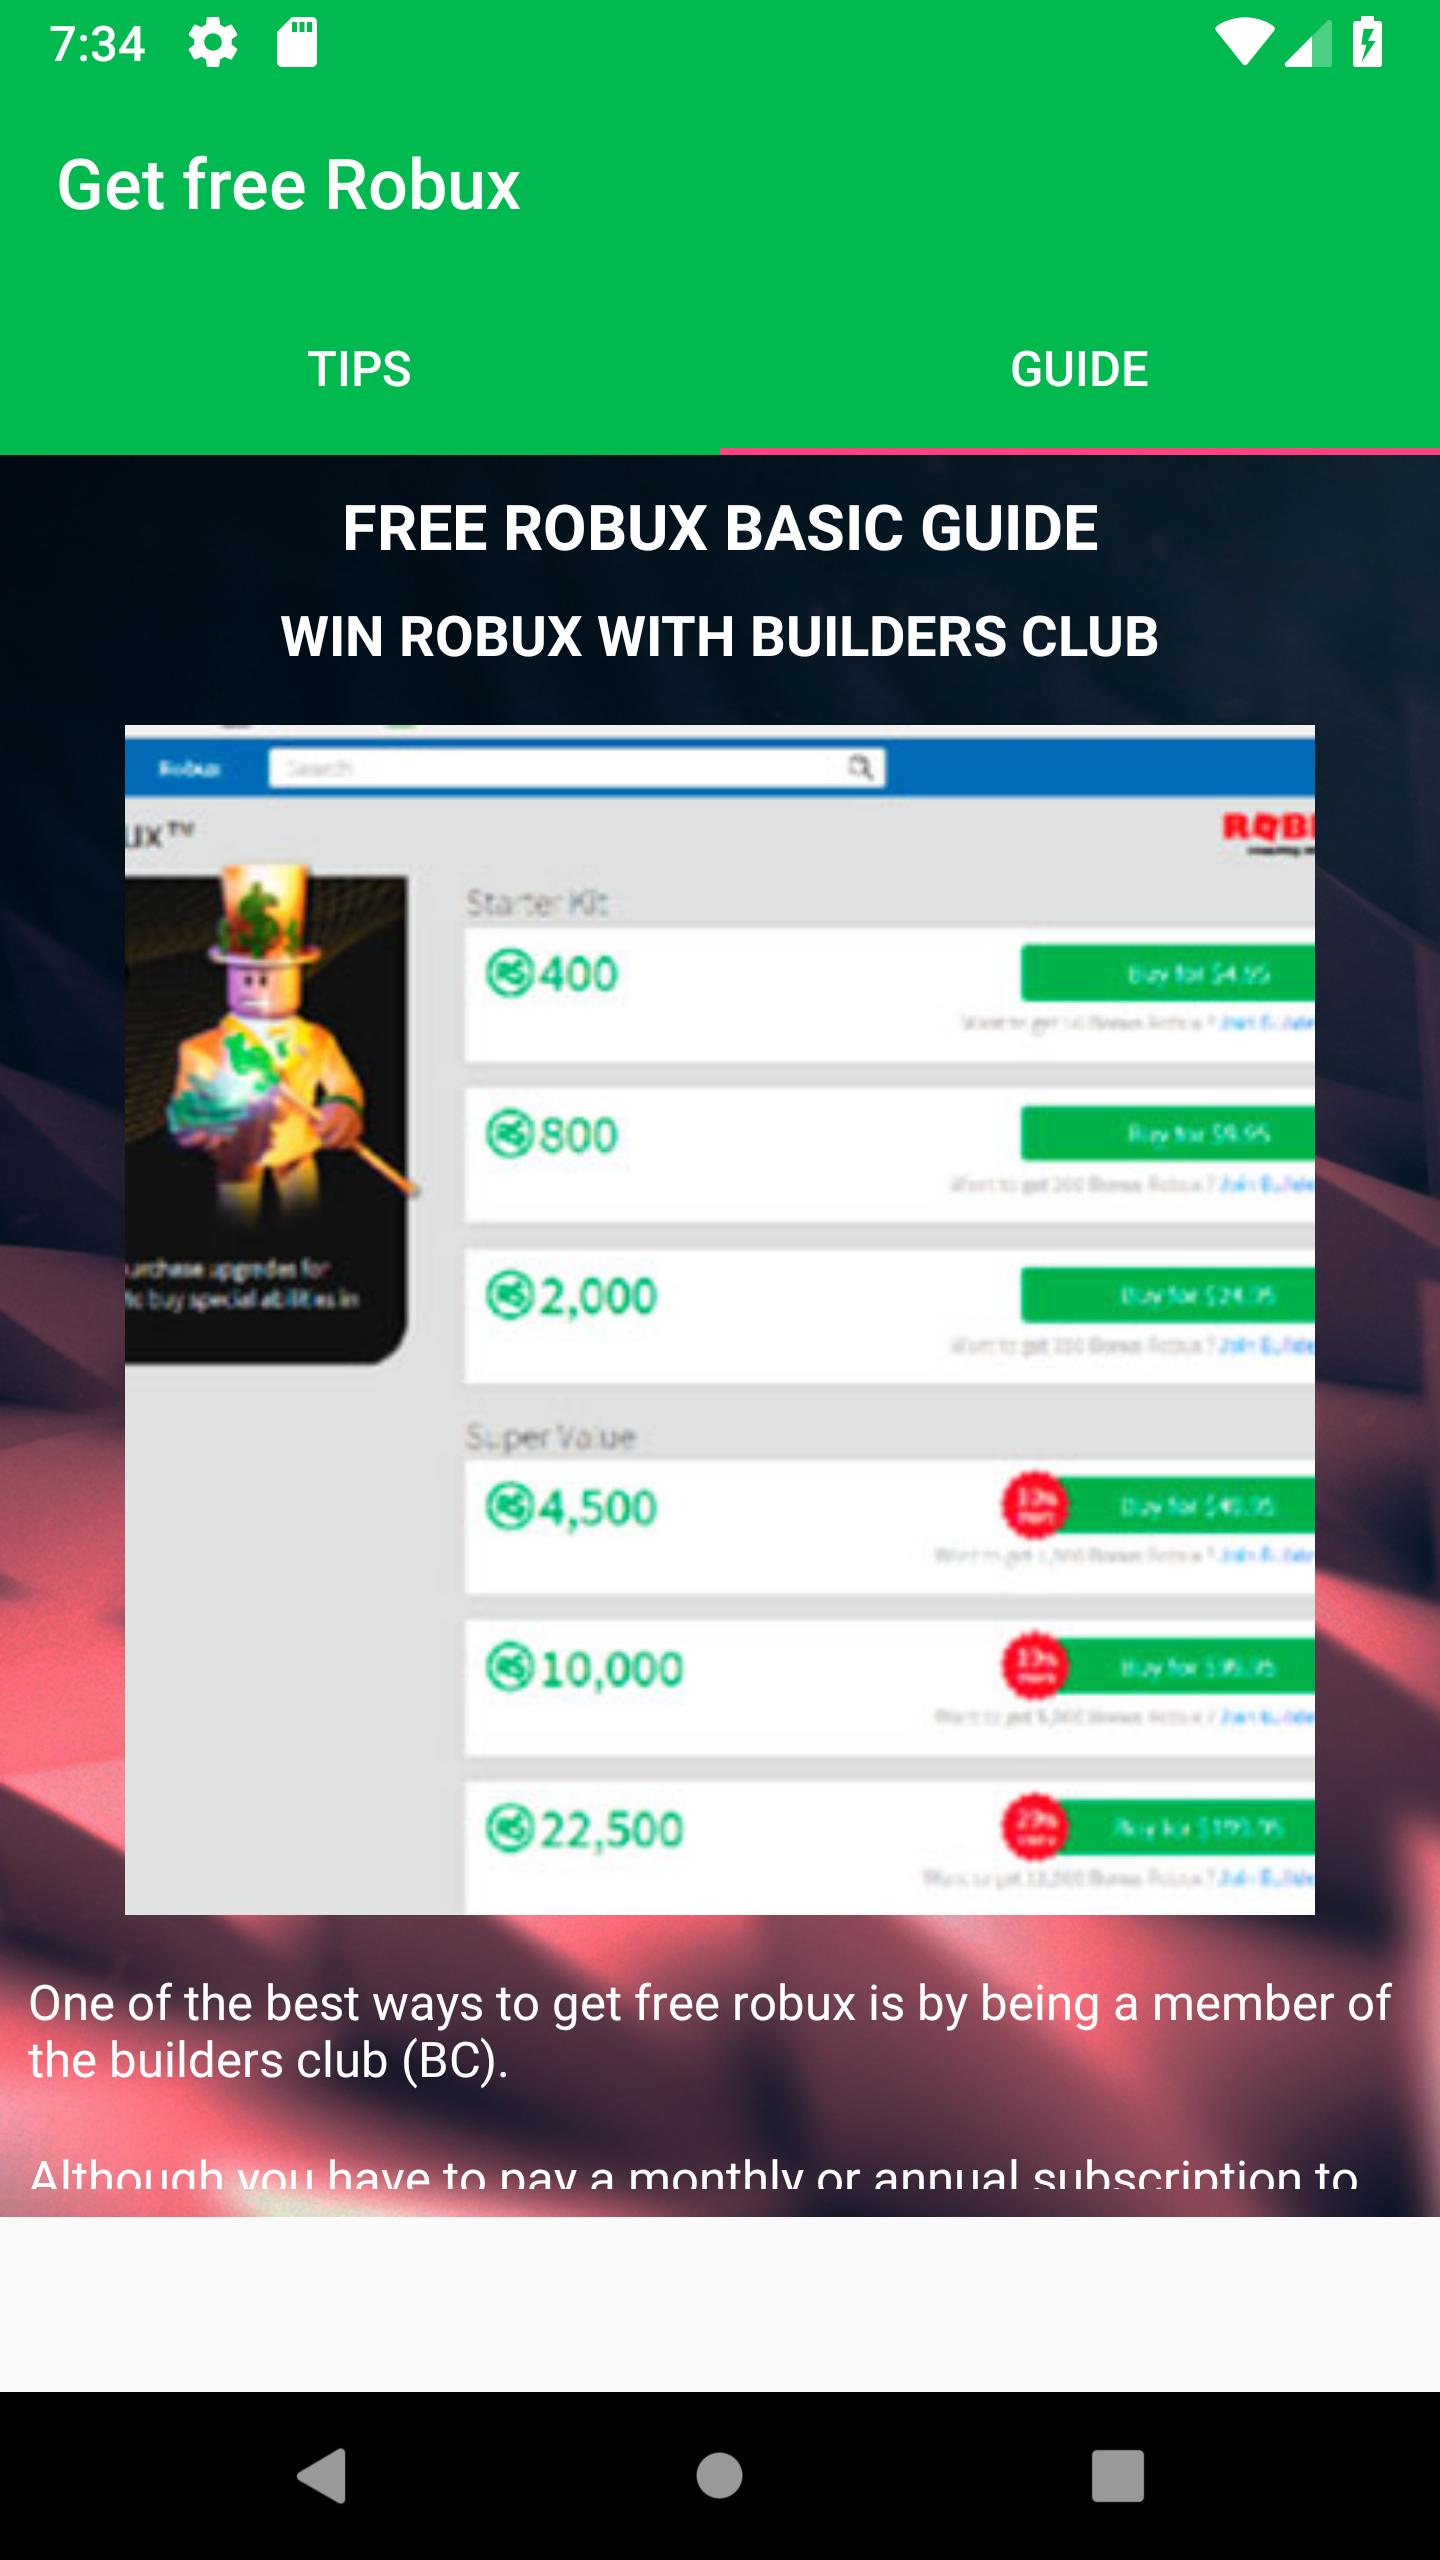 Consigue Robux Gratis Hoy Trucos Consejos 2018 For Android Apk Download - para conseguir robux gartis 10000